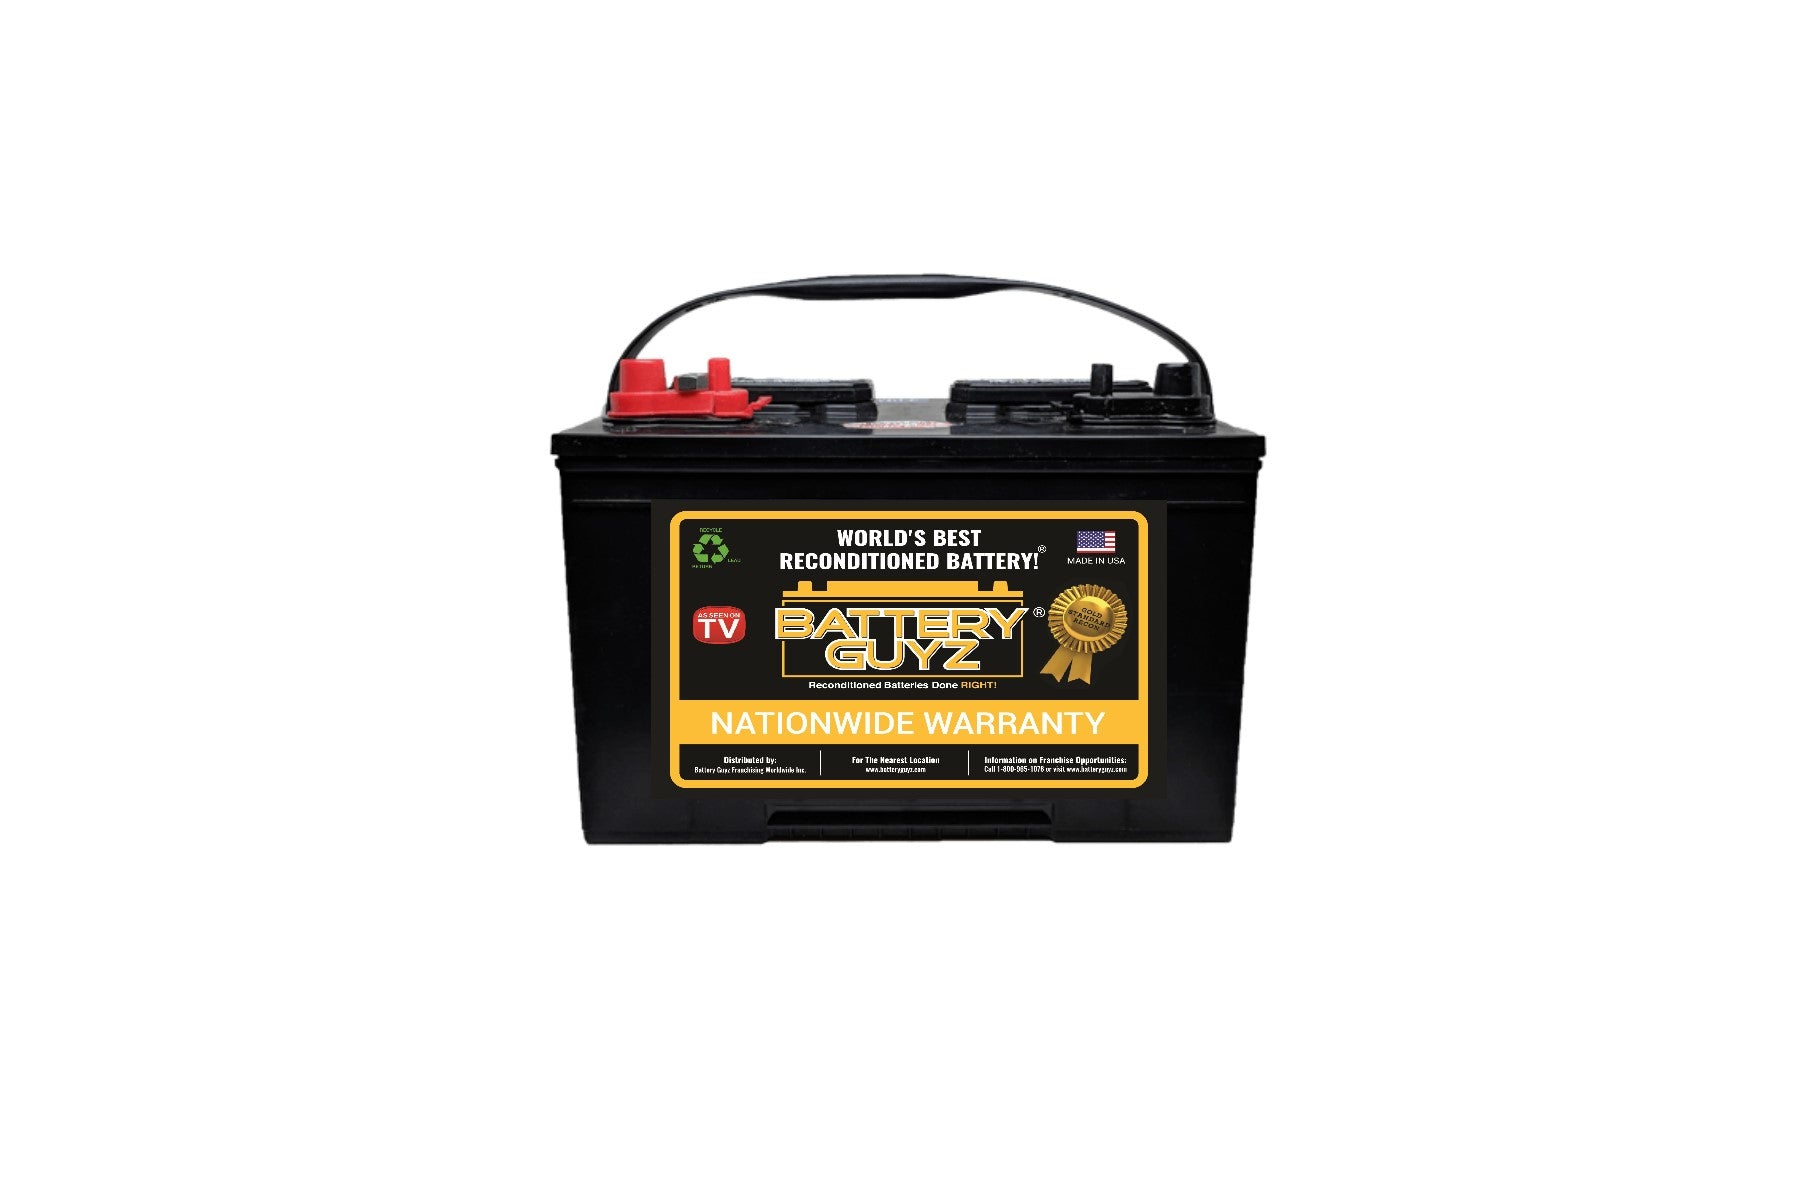 CARIPAR Starterbatterien / Autobatterien - 57088 SMF 